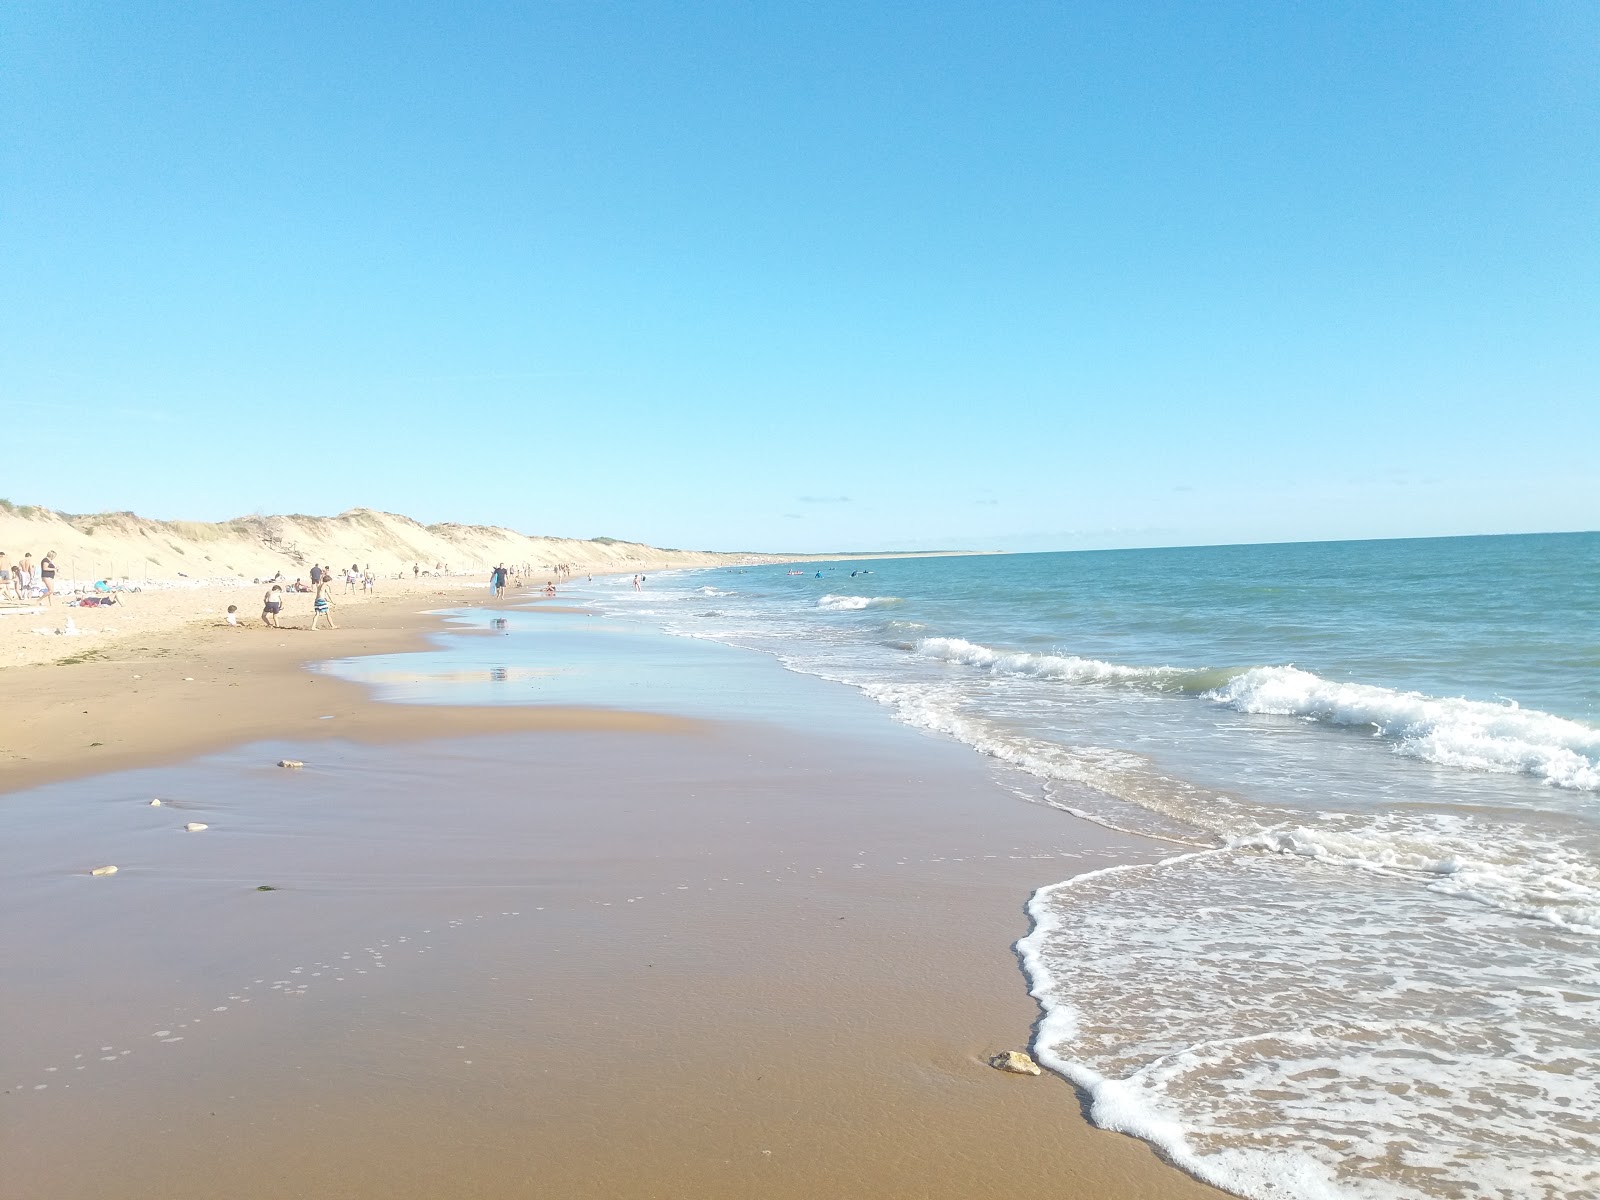 Foto av Rocher beach med ljus sand yta